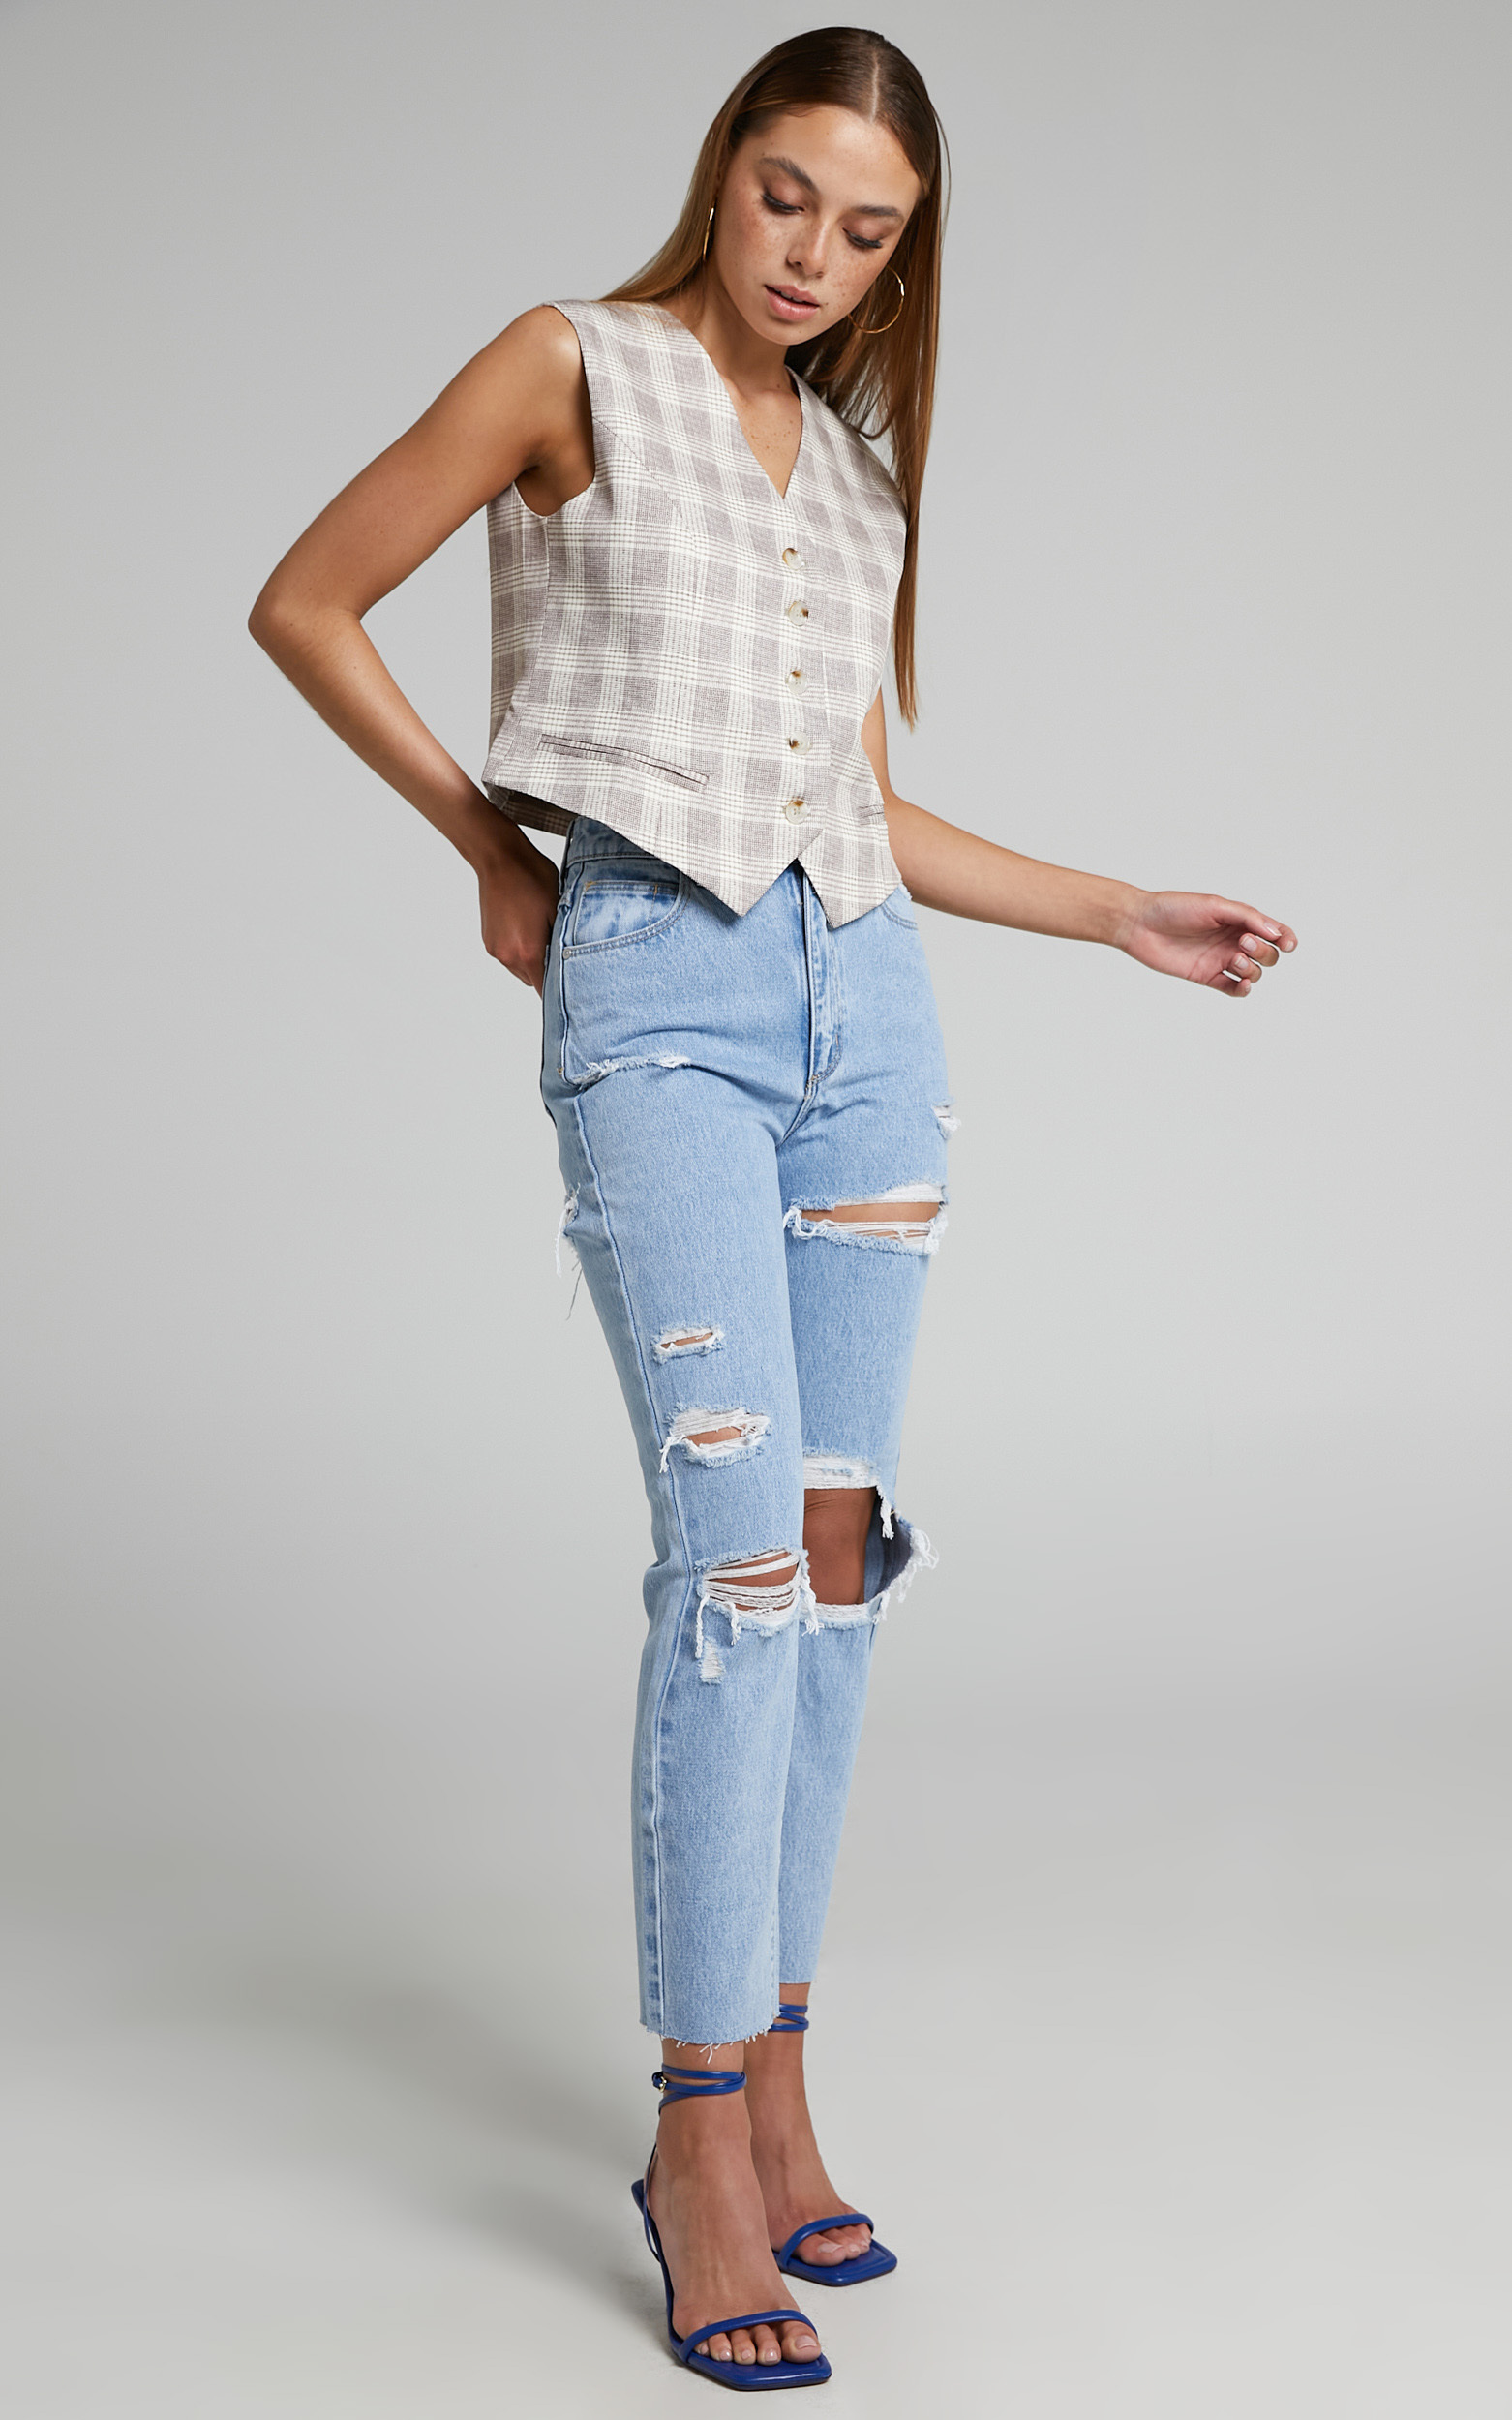 Abrand - 94 High Slim Jeans in Walkaway Shred - 06, BLU1, hi-res image number null